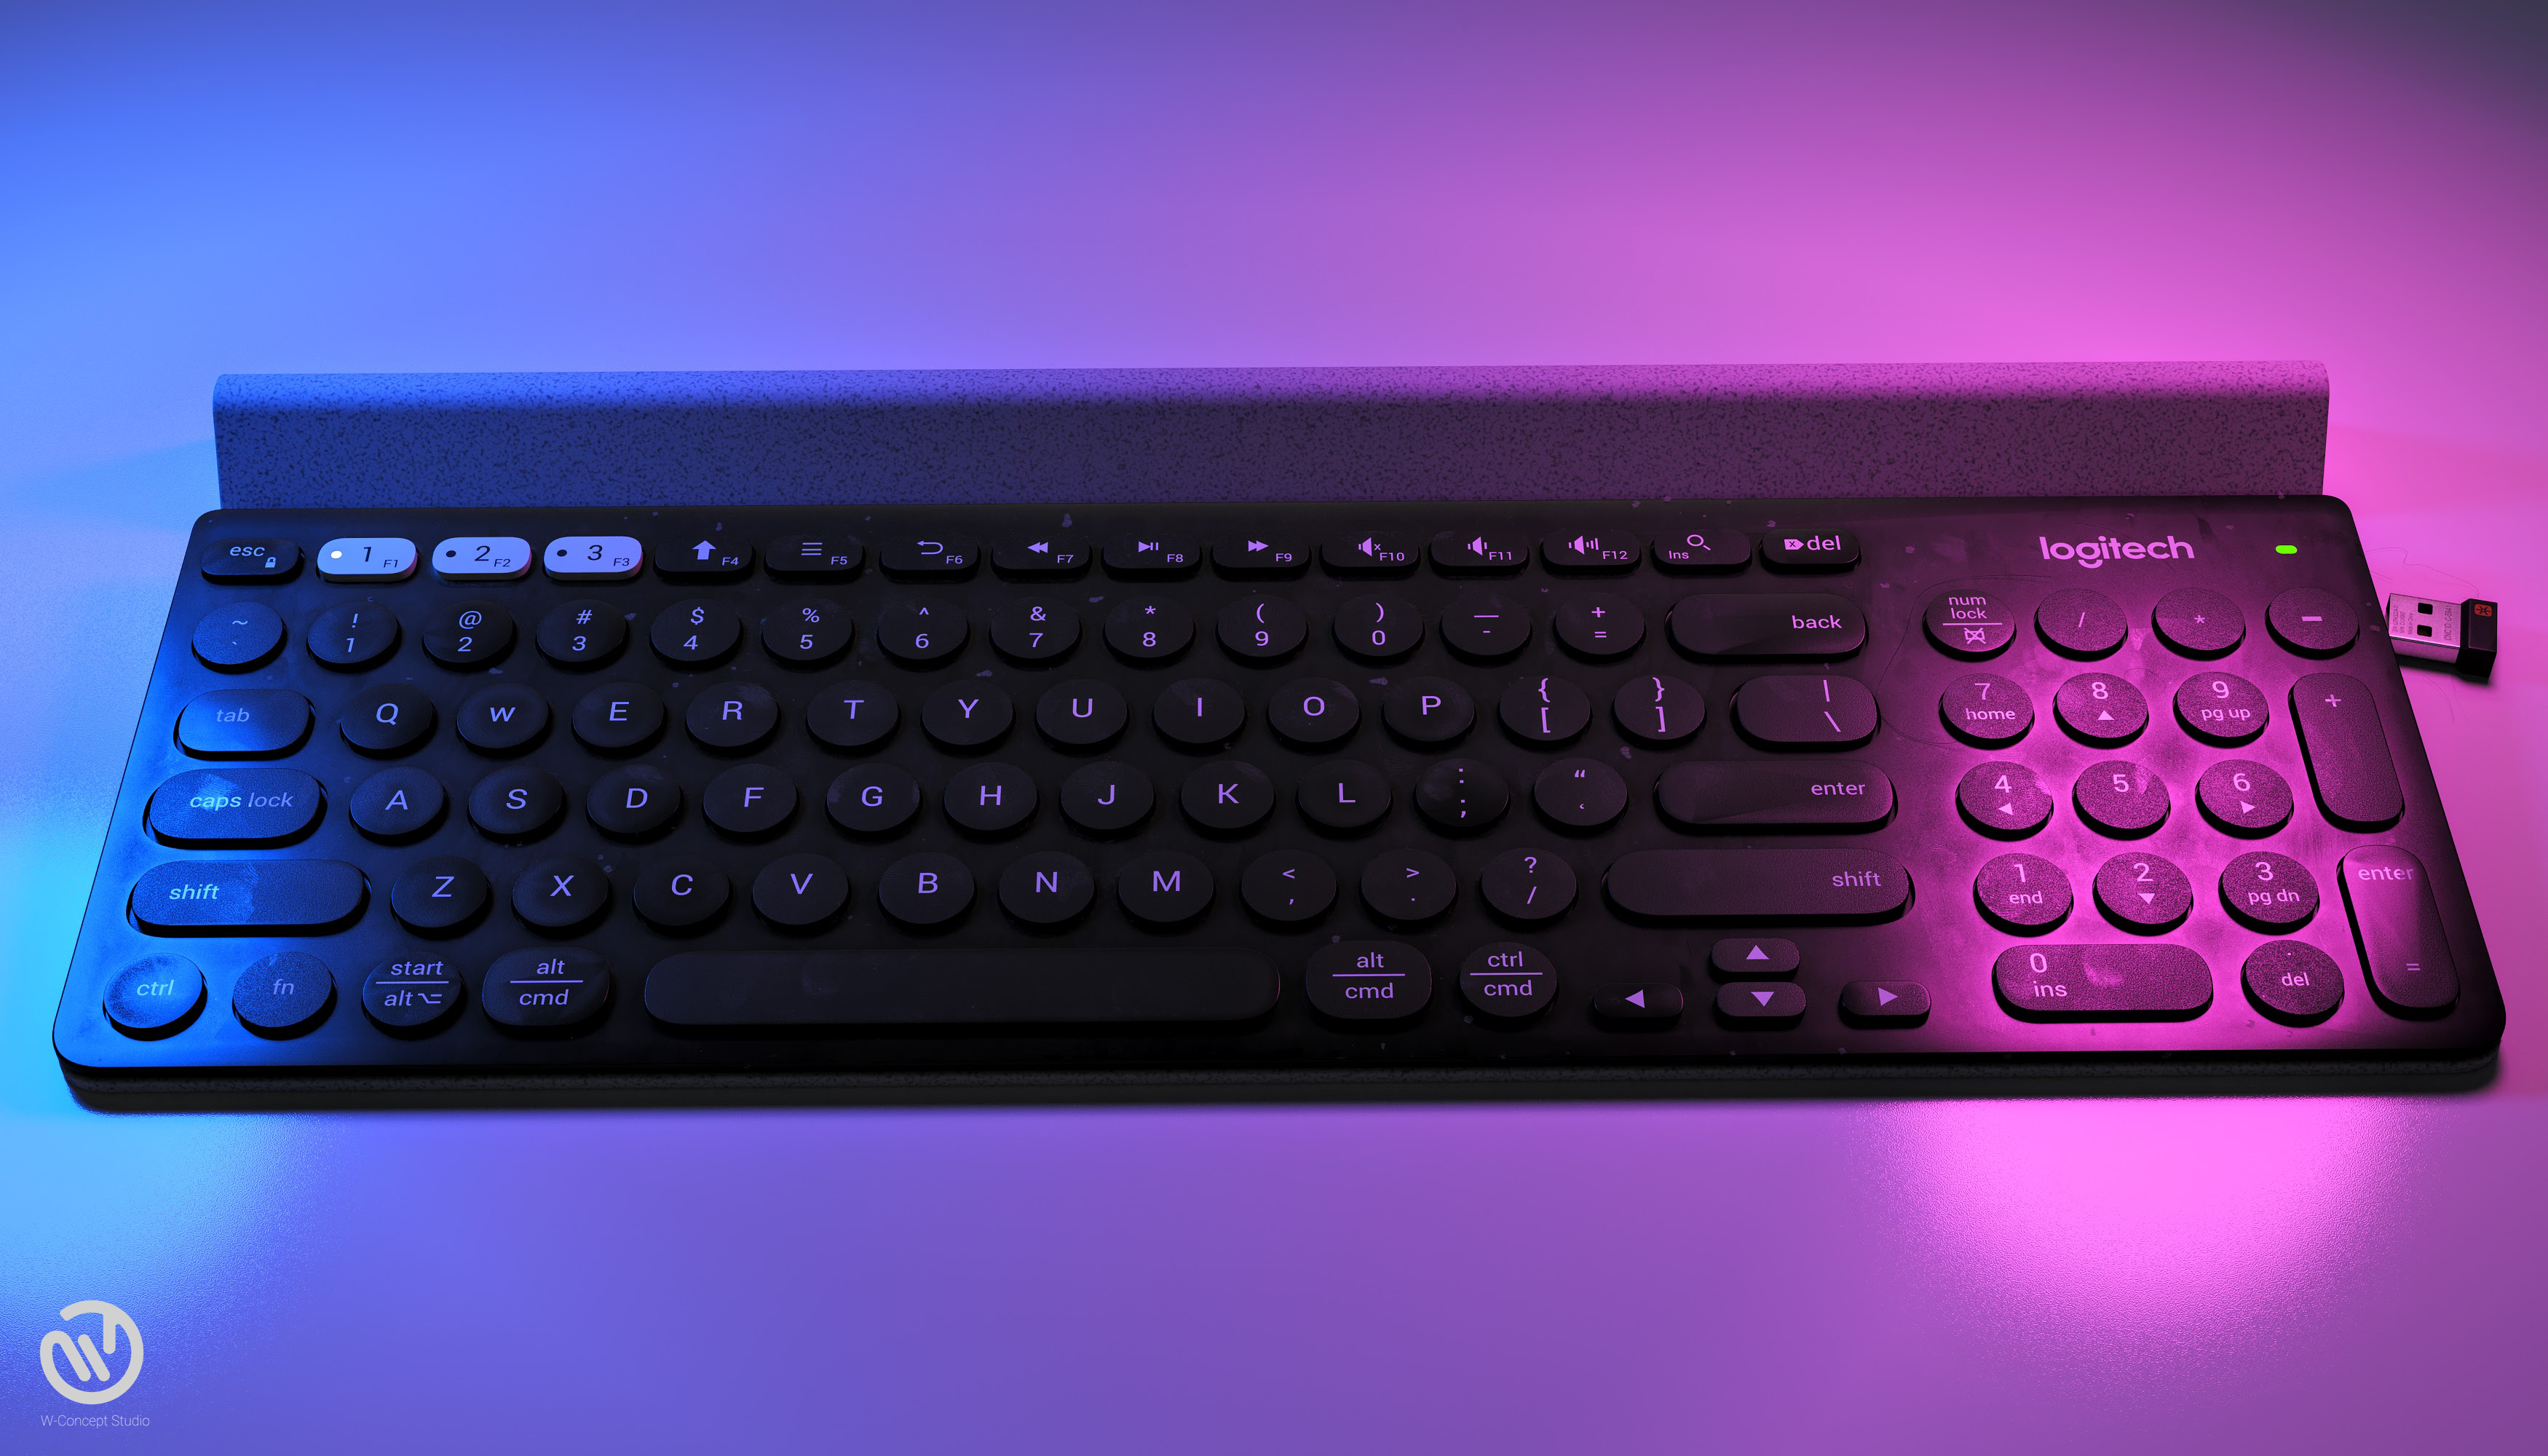 The Dirty Keyboard